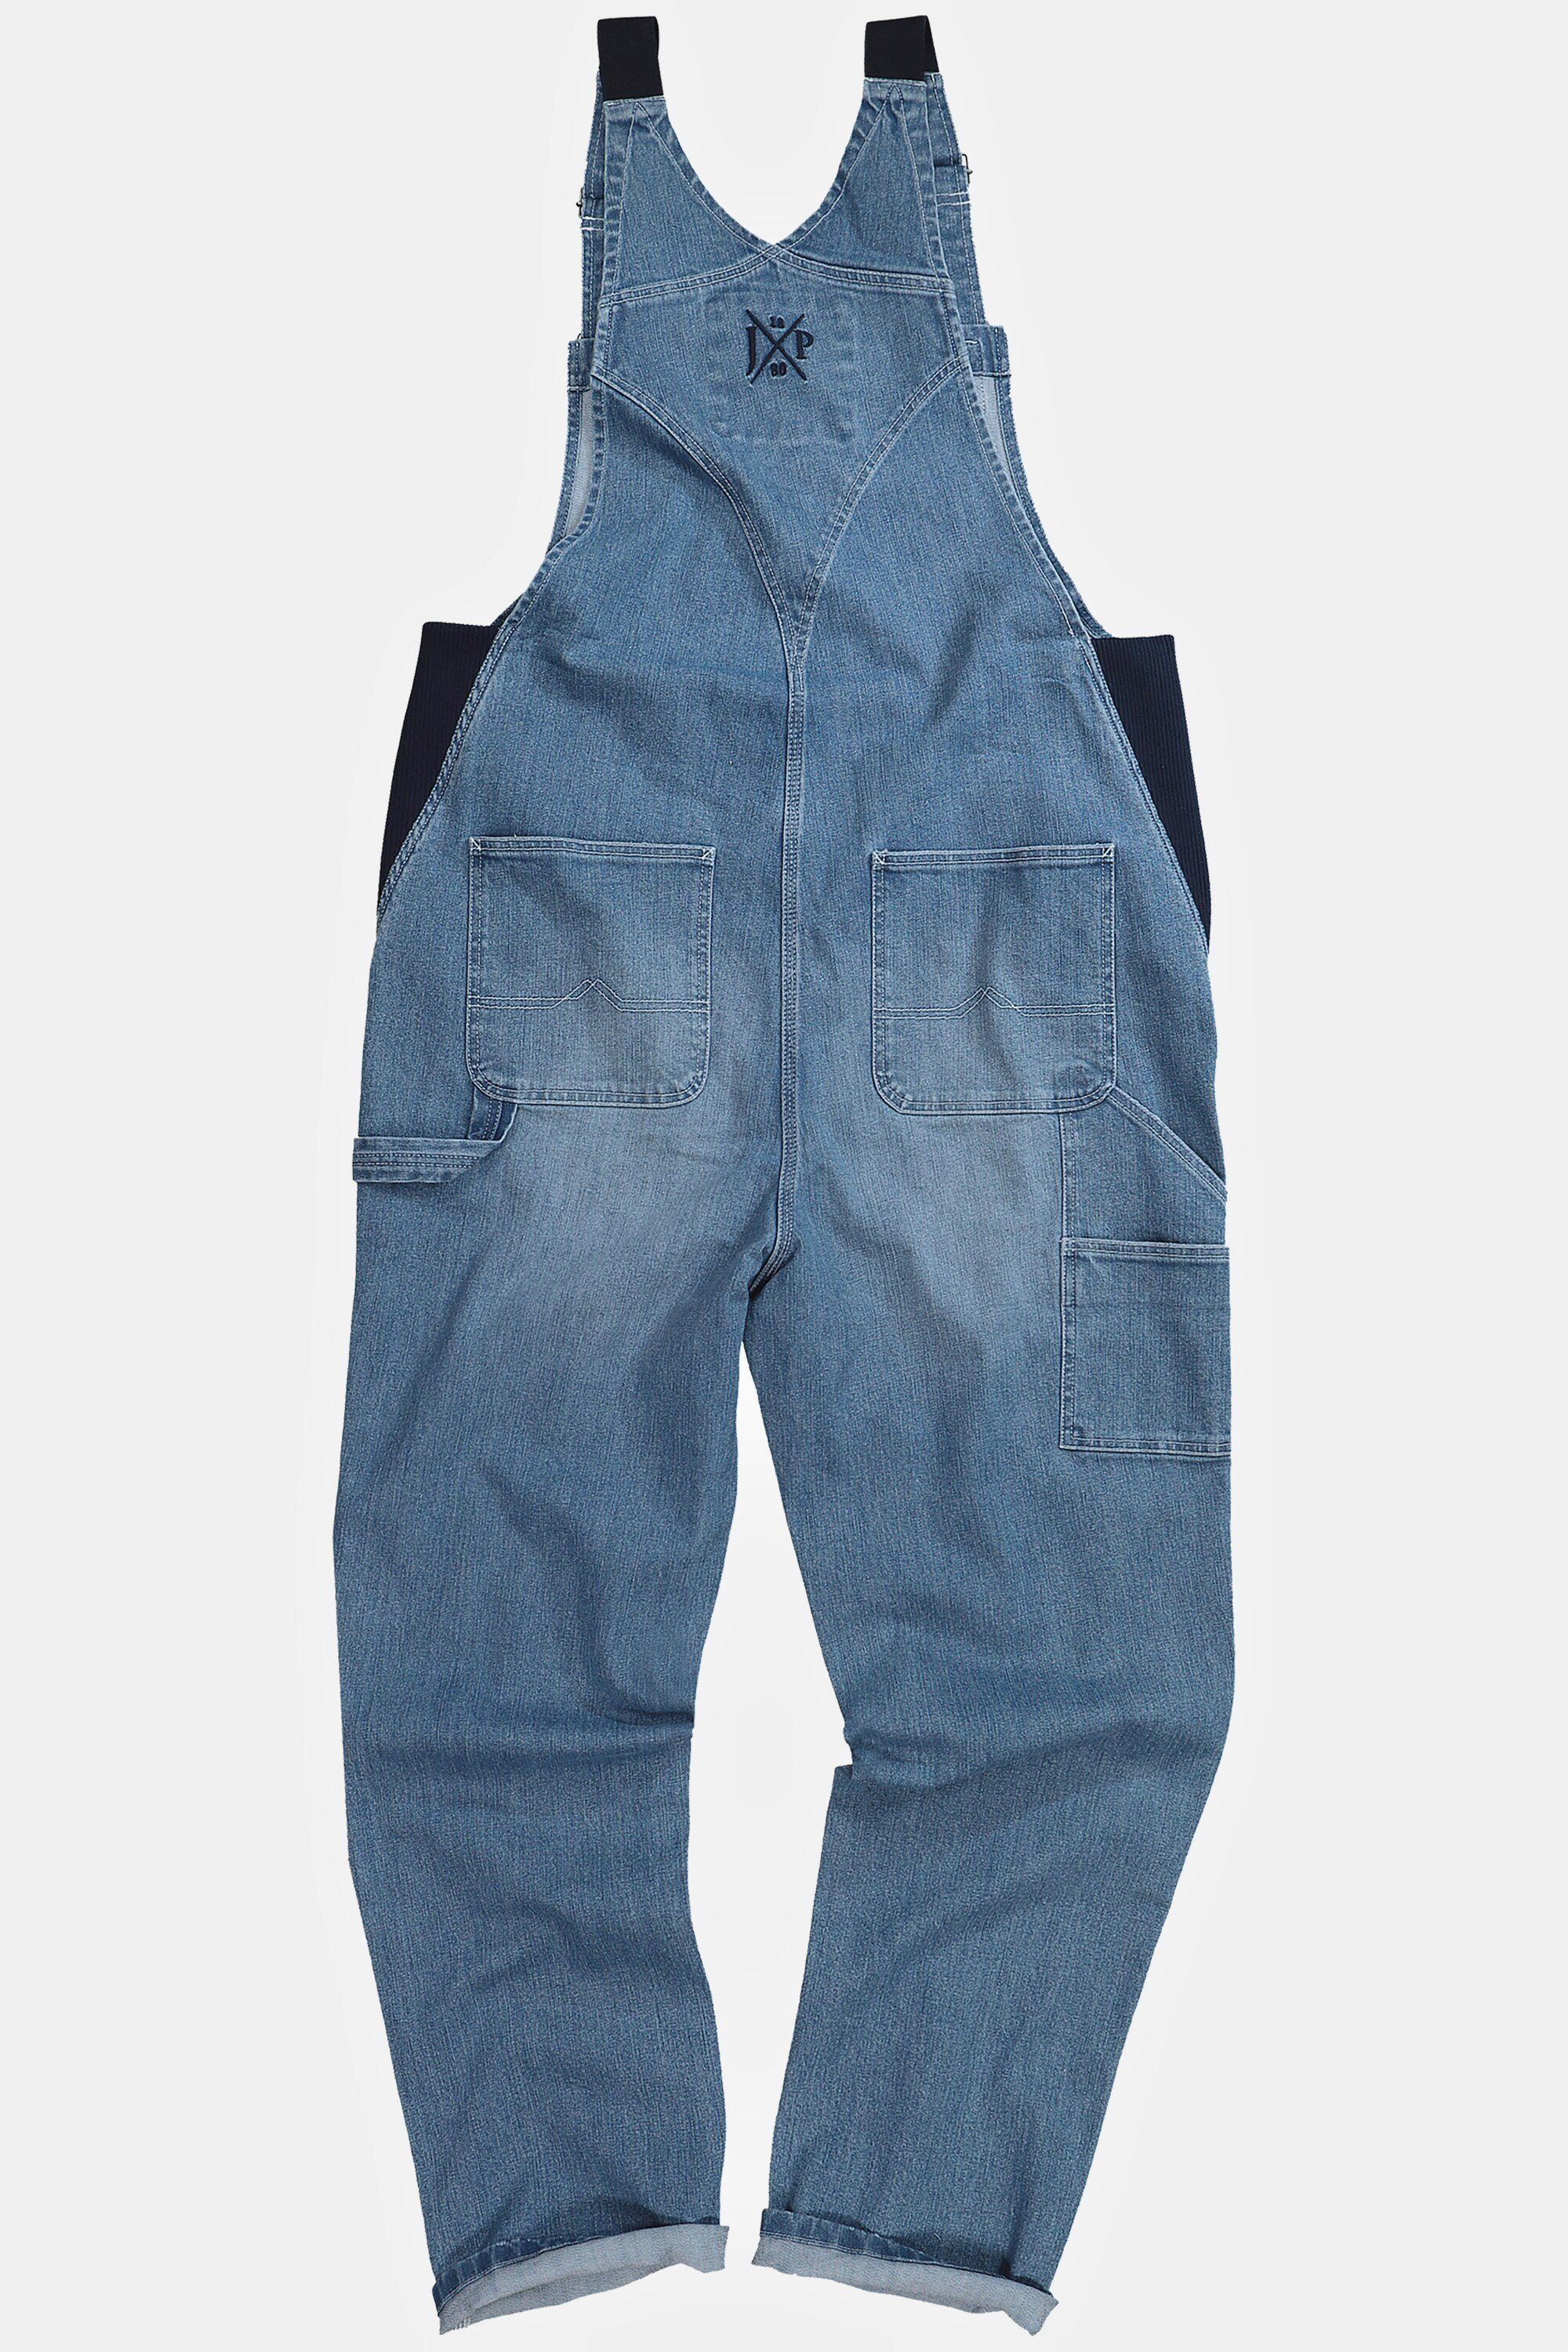 JP1880 Cargohose Jeans Latzhose Taschen Fit Workwear blue viele Relaxed light